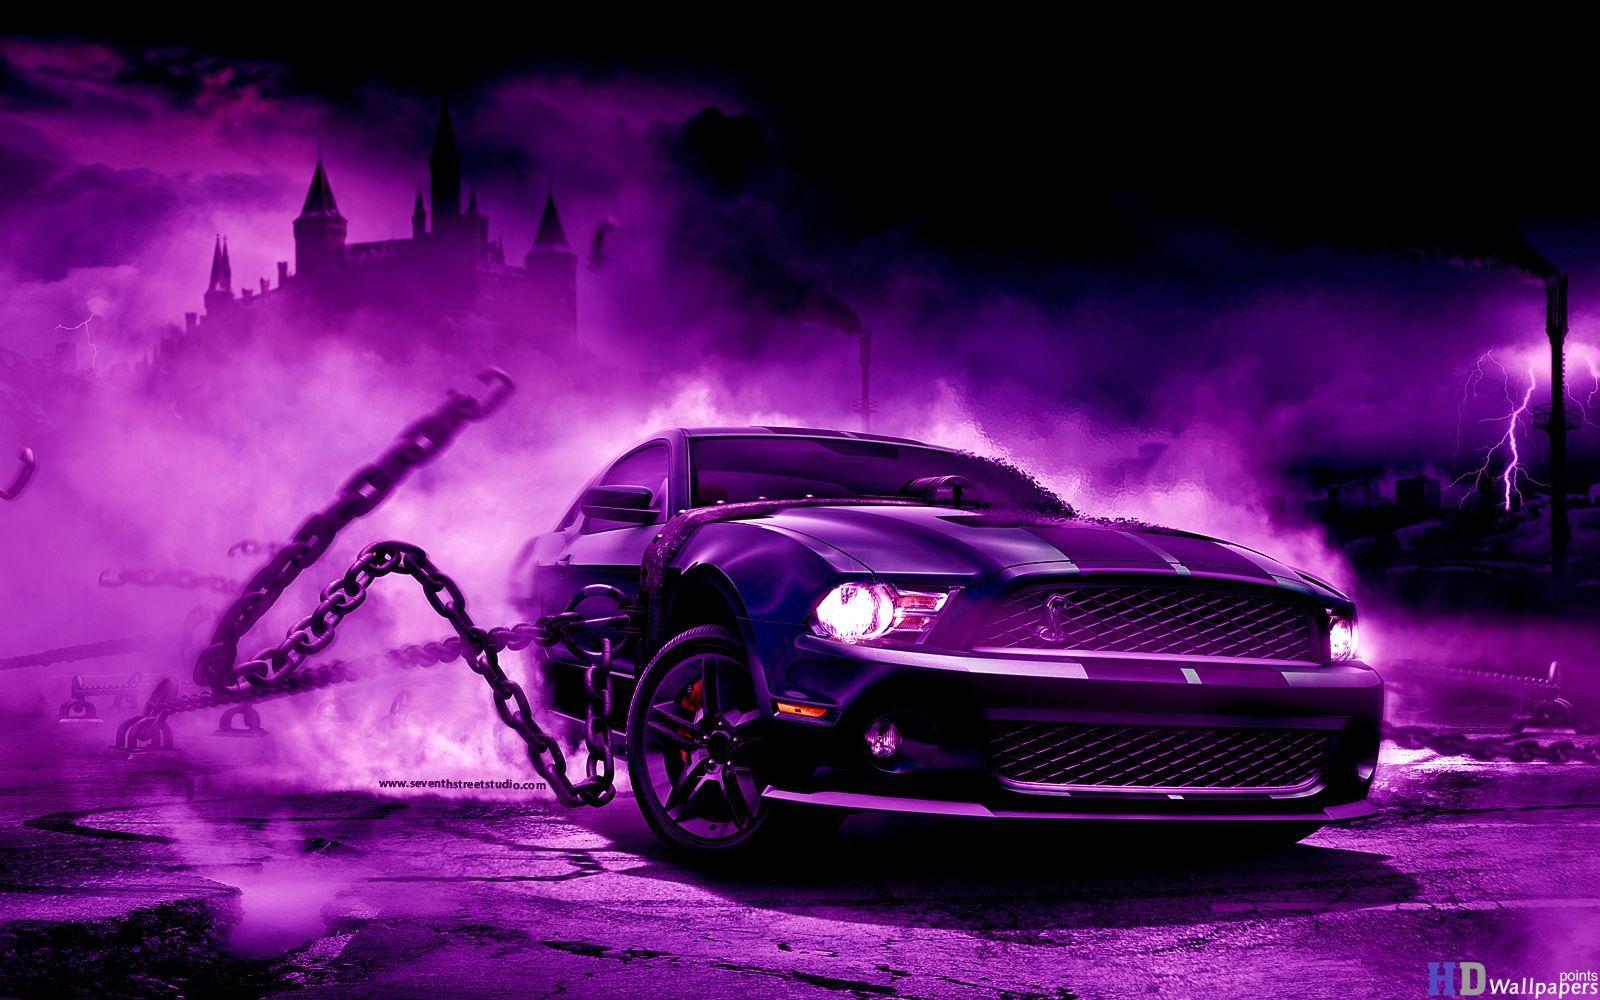 Cool 3D Wallpaper Purple. Cool Car 3D Wallpaper. Purple